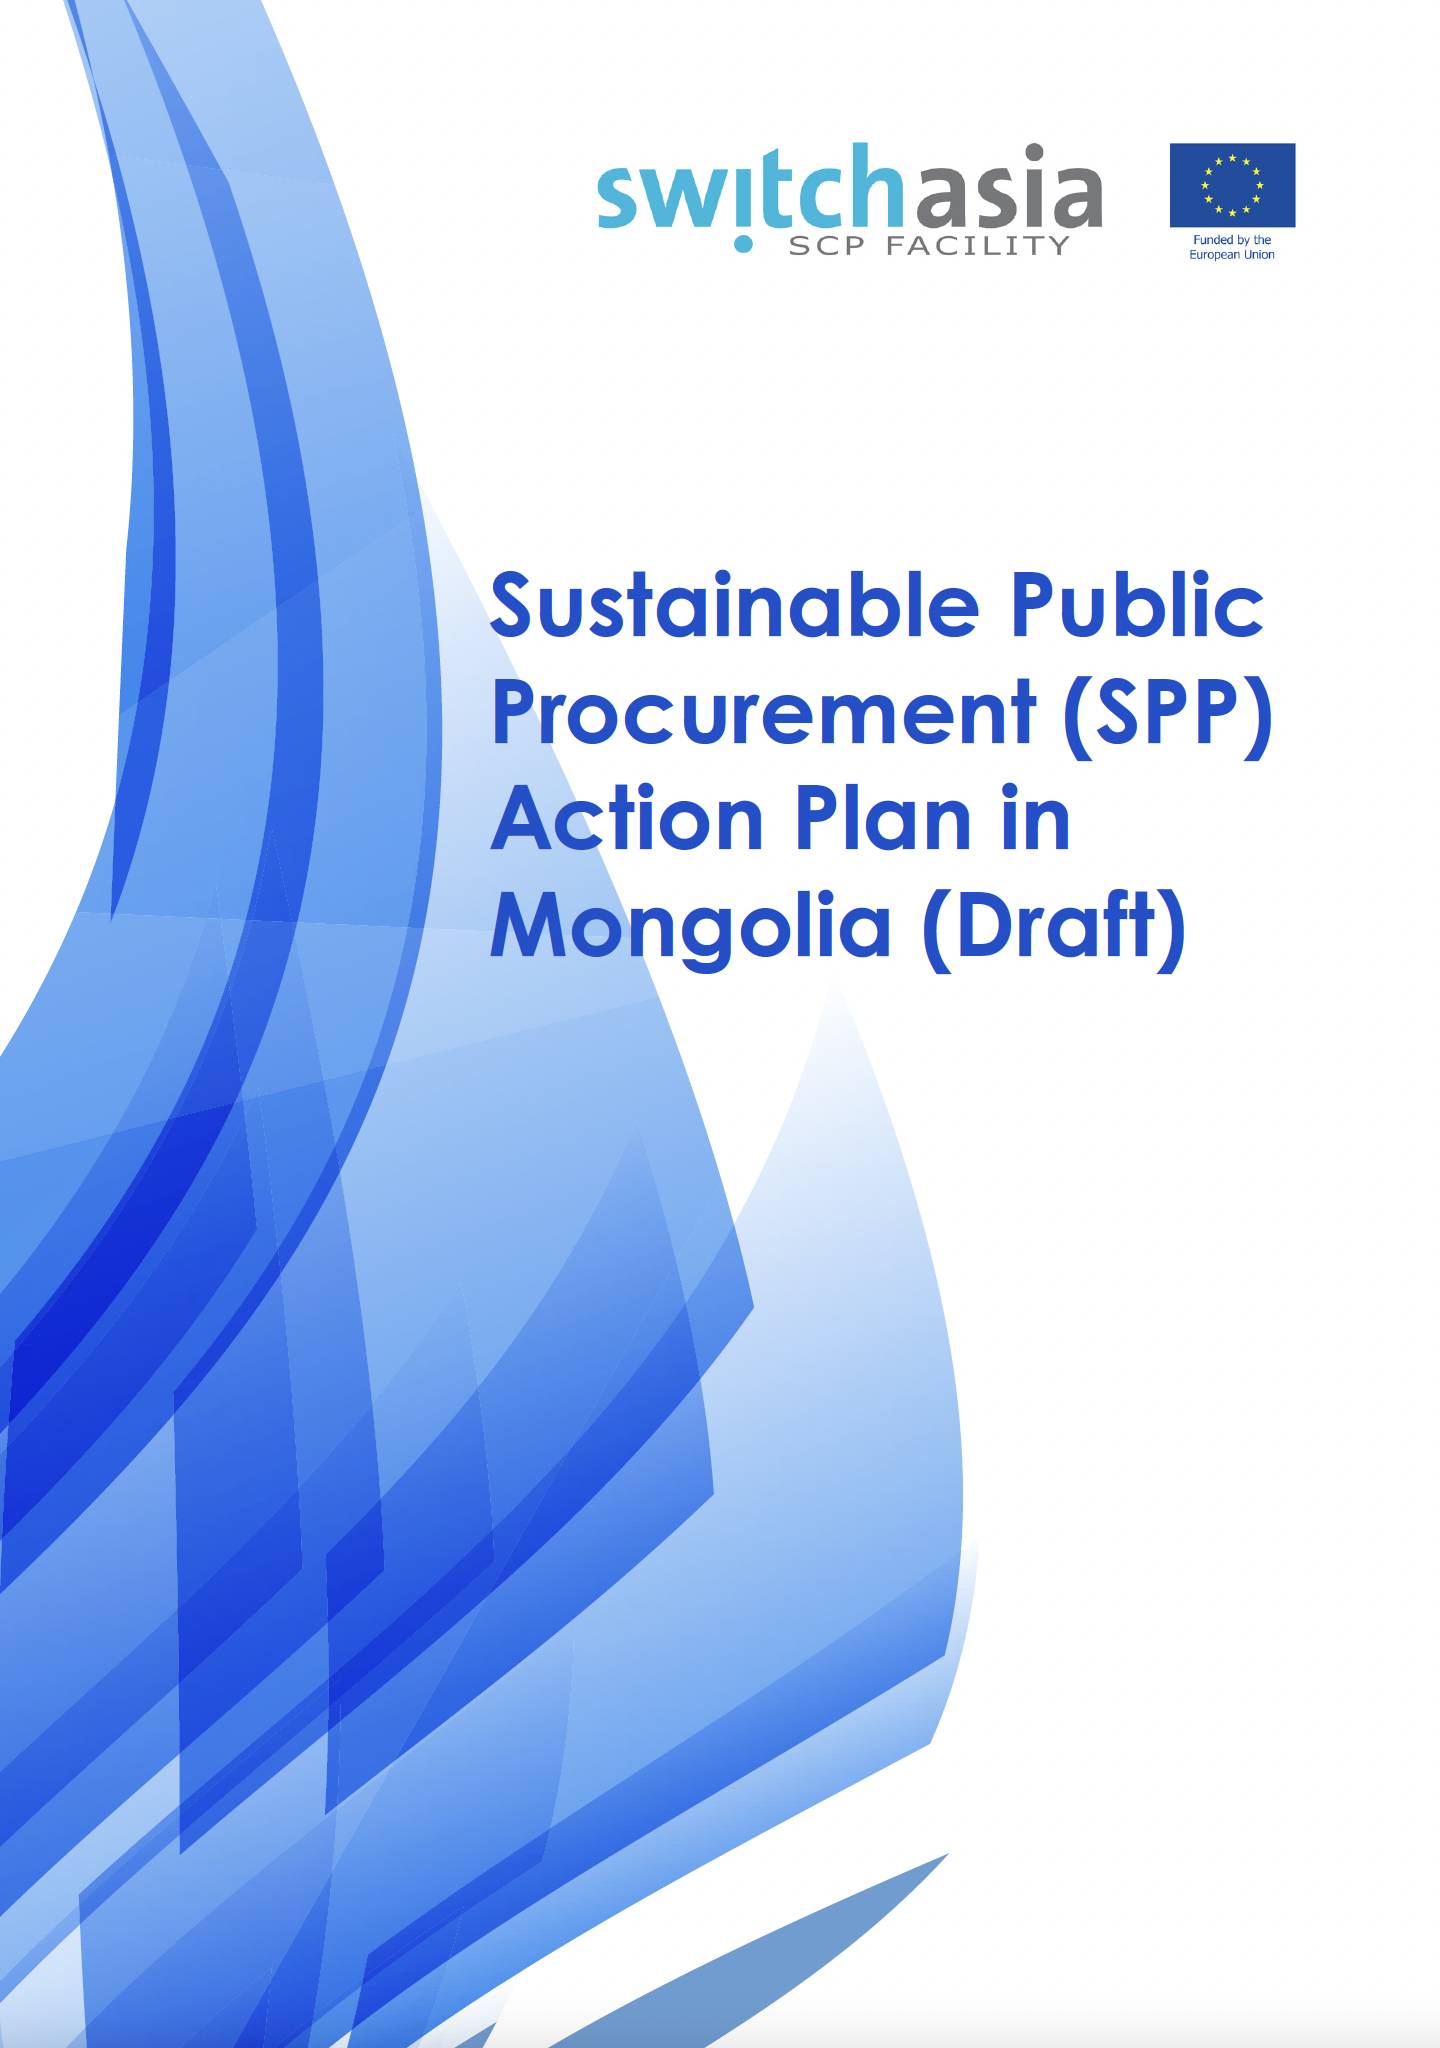 Sustainable Public Procurement Action Plan in Mongolia (Draft)